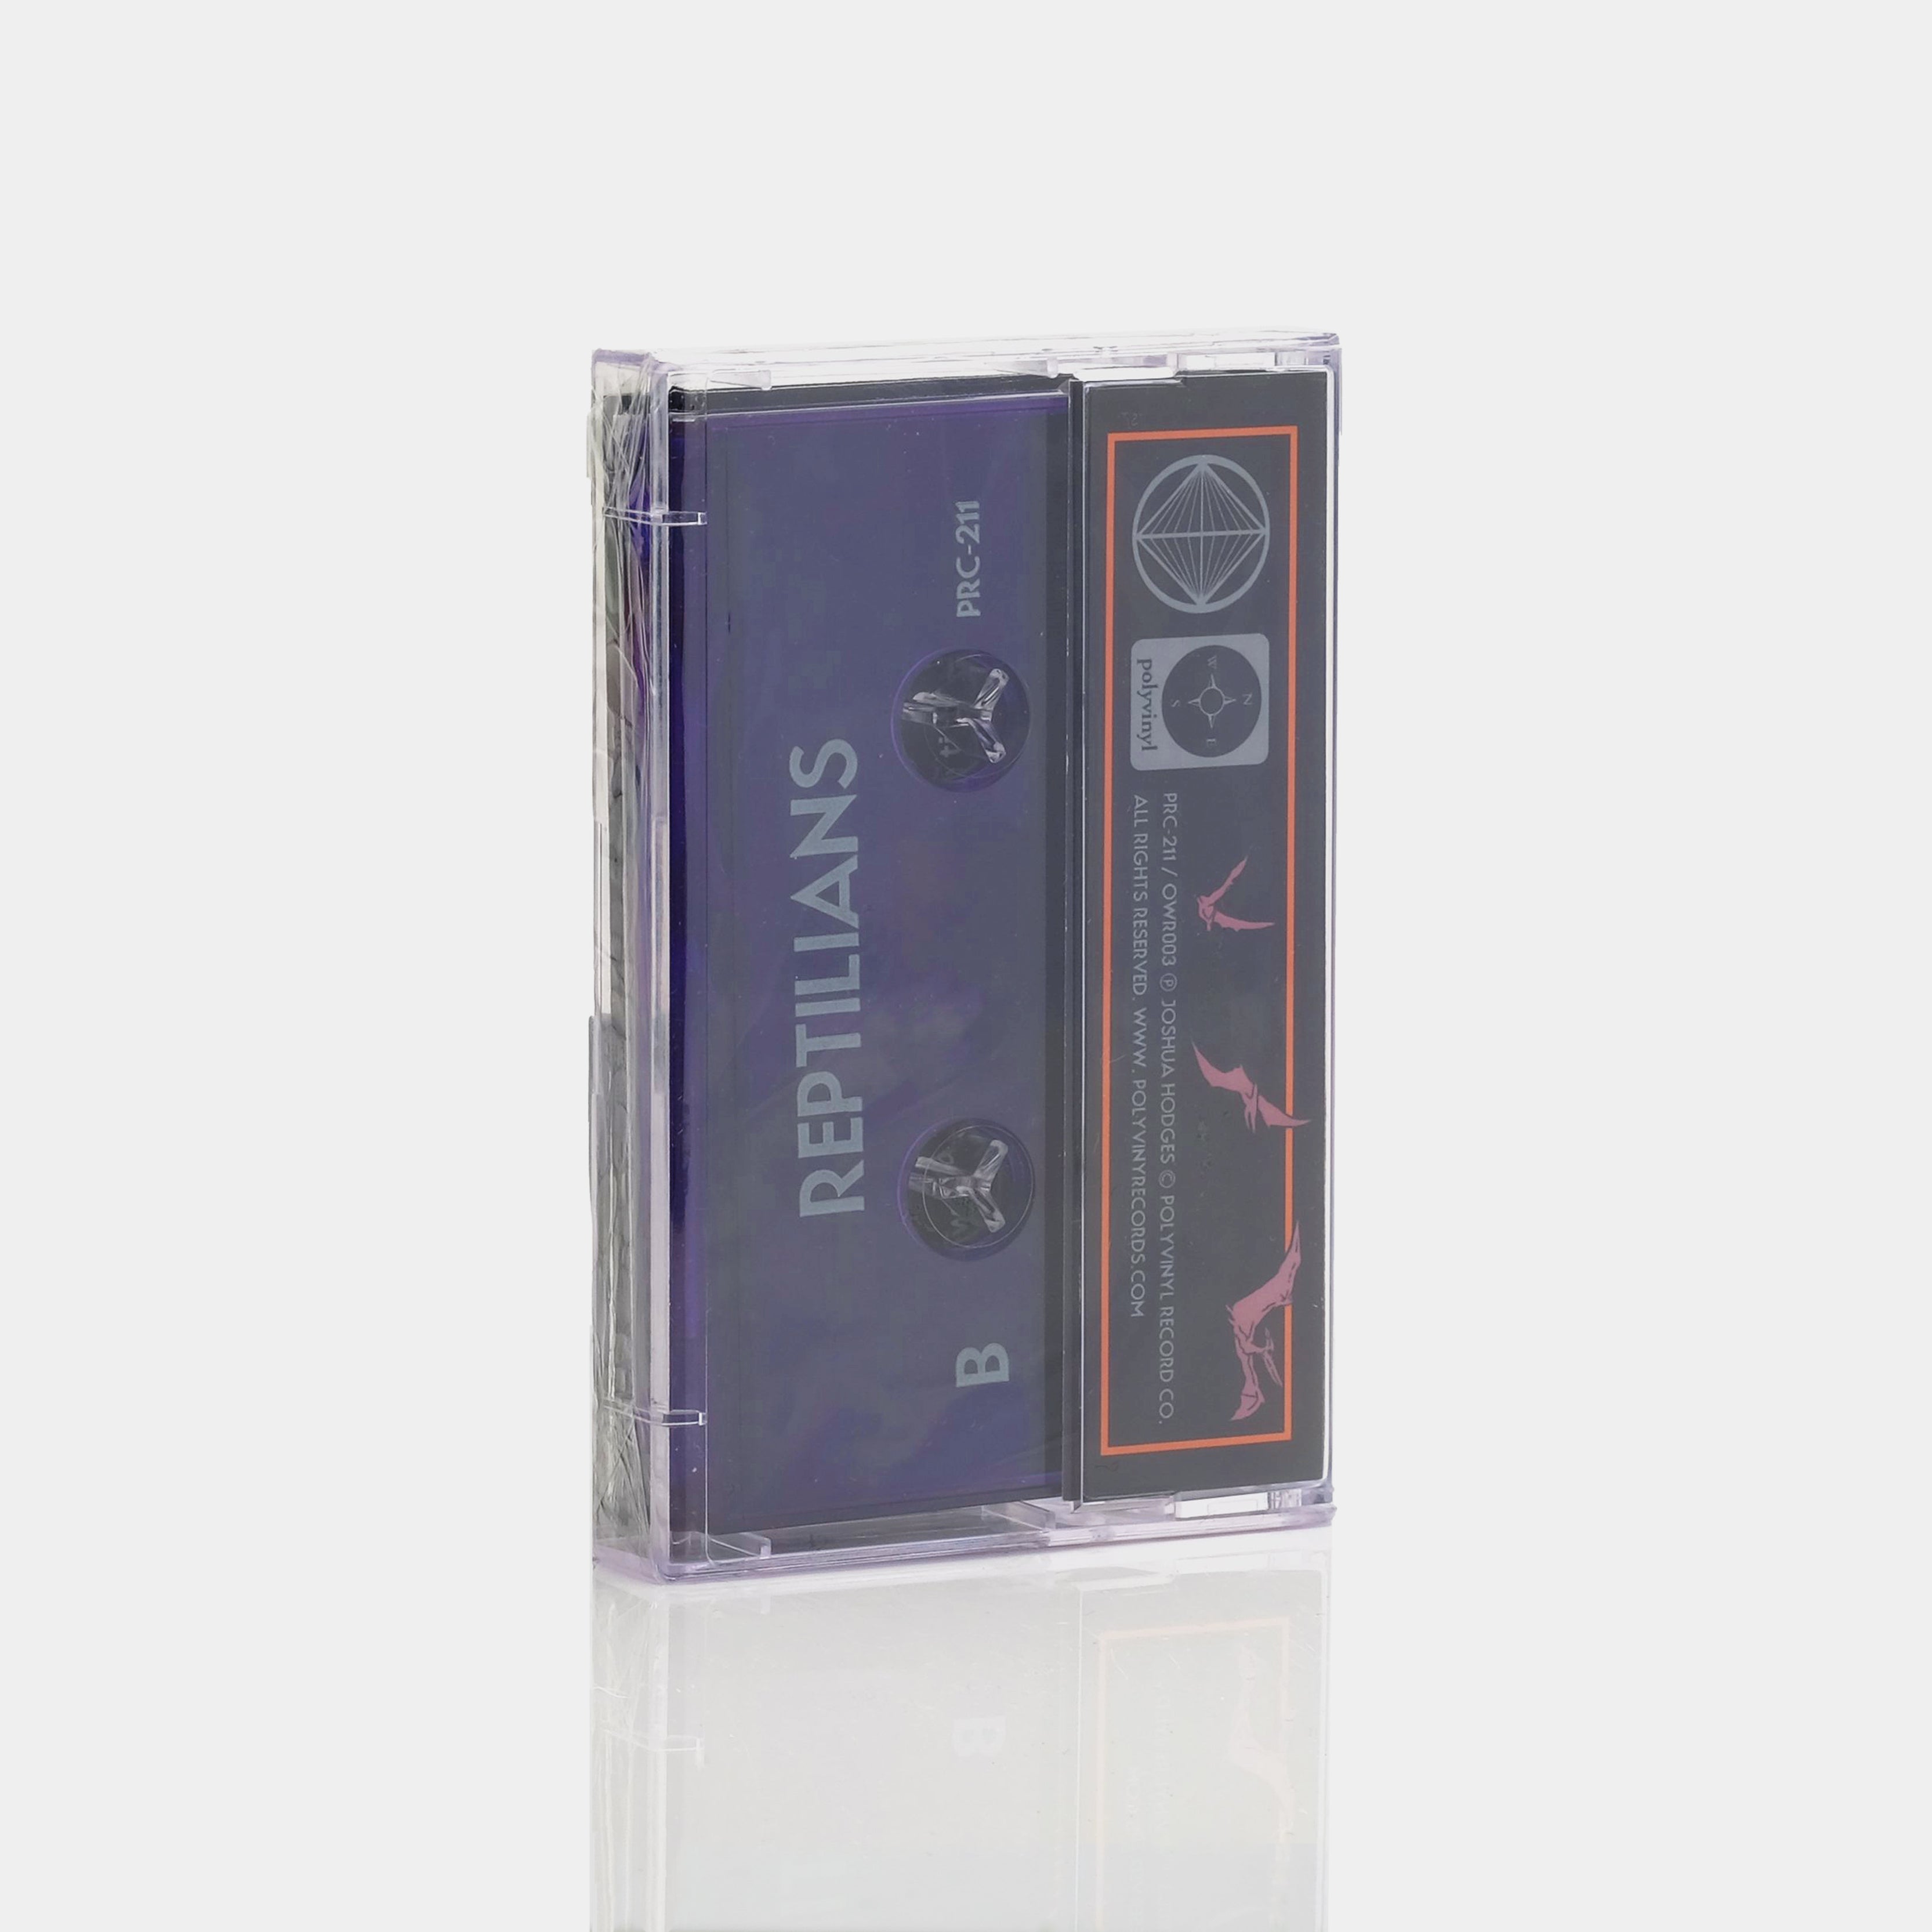 STRFKR - Reptilians Cassette Tape